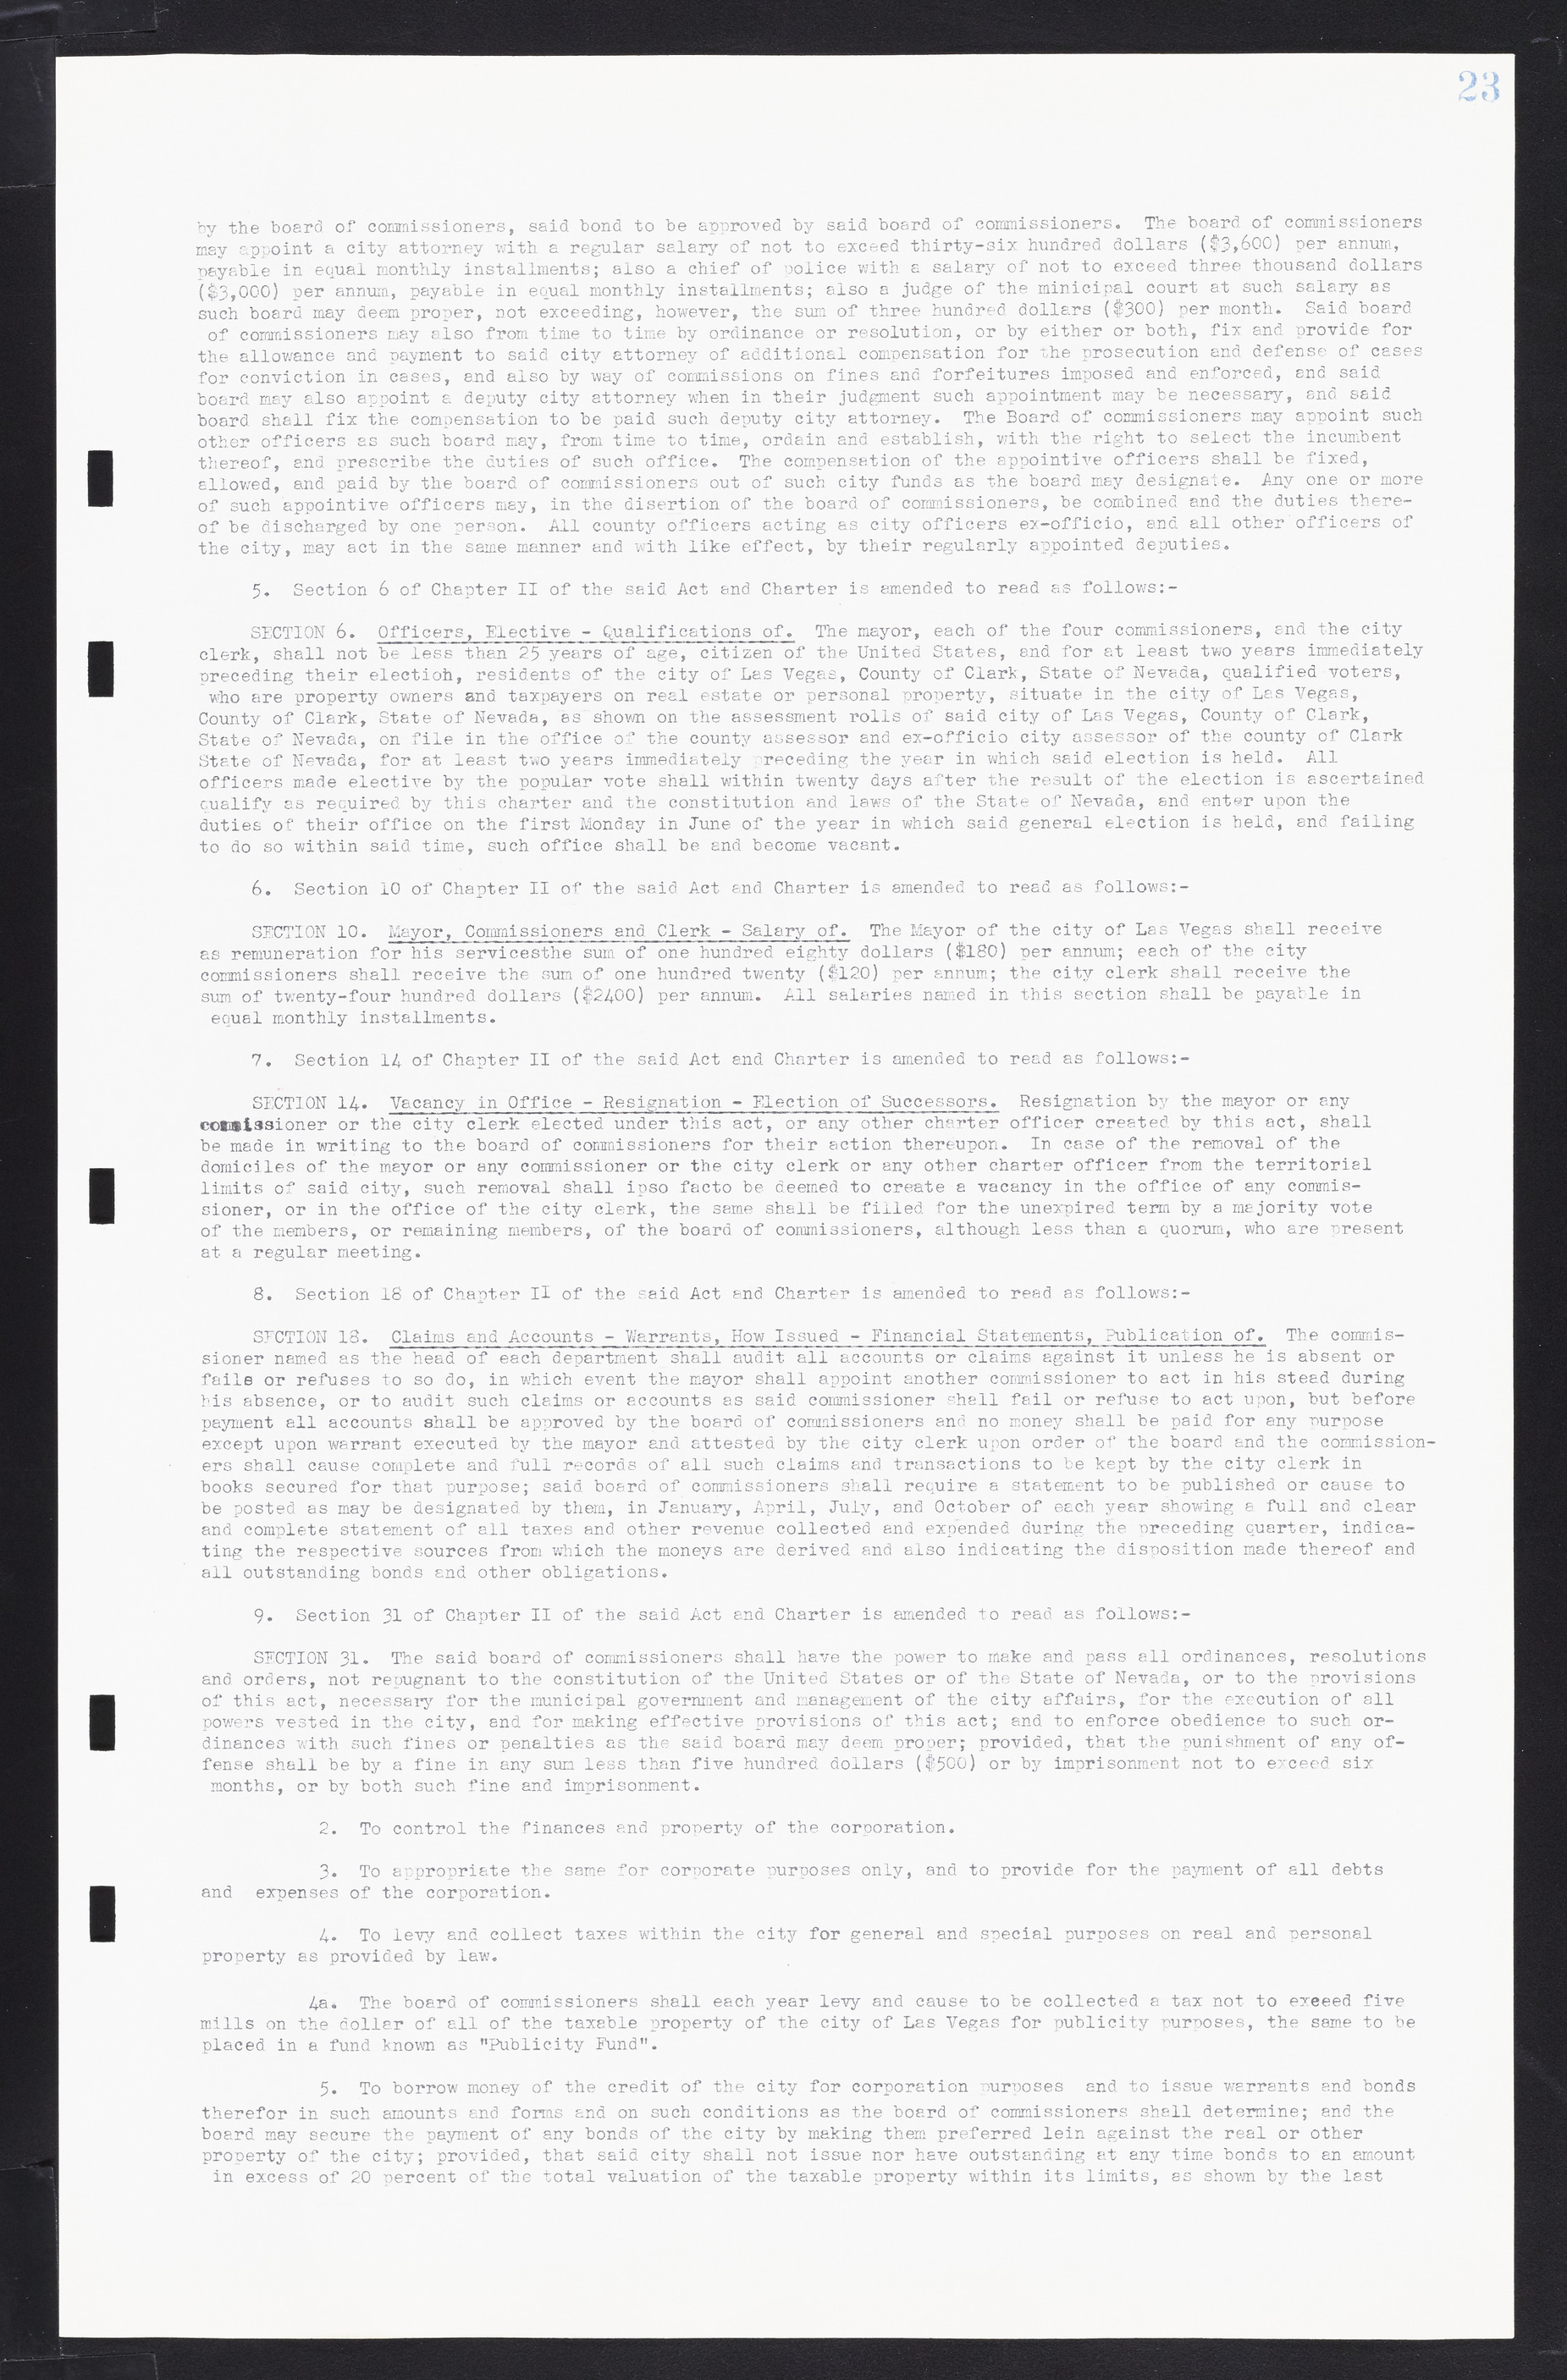 Las Vegas City Commission Minutes, February 17, 1937 to August 4, 1942, lvc000004-29